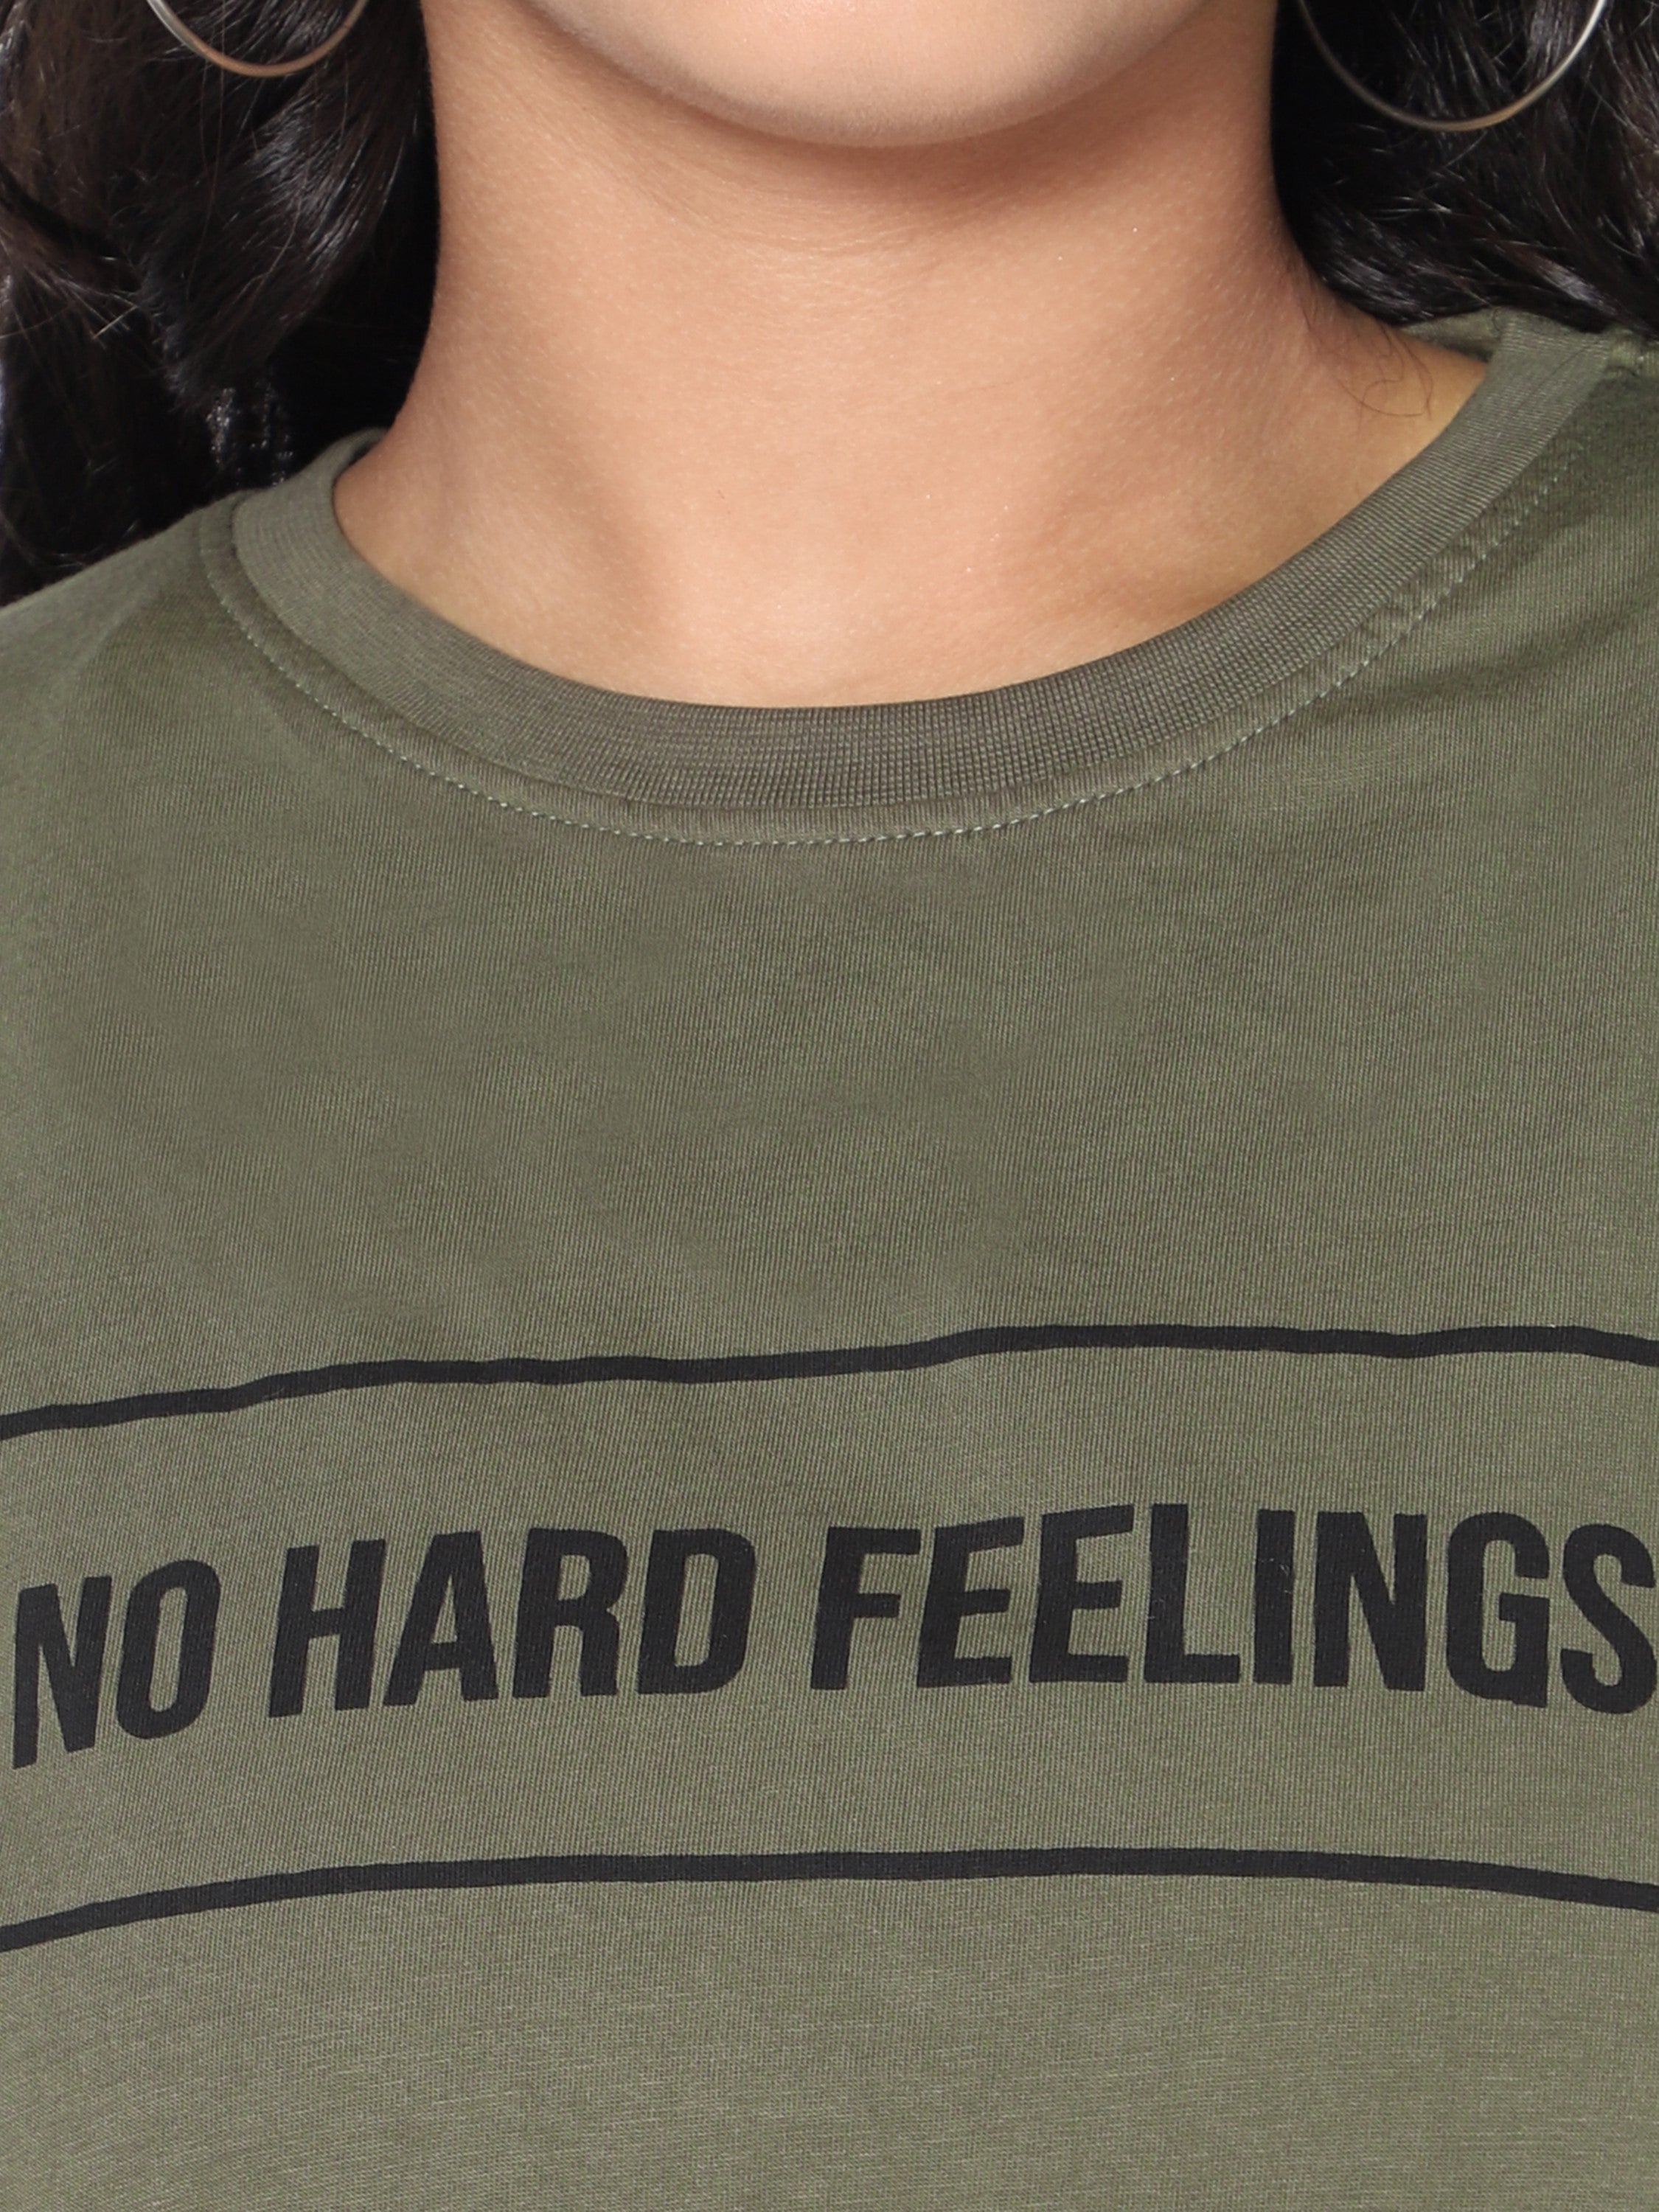 Girls Crop Top, T-shirt- No Hard Feelings -Olive